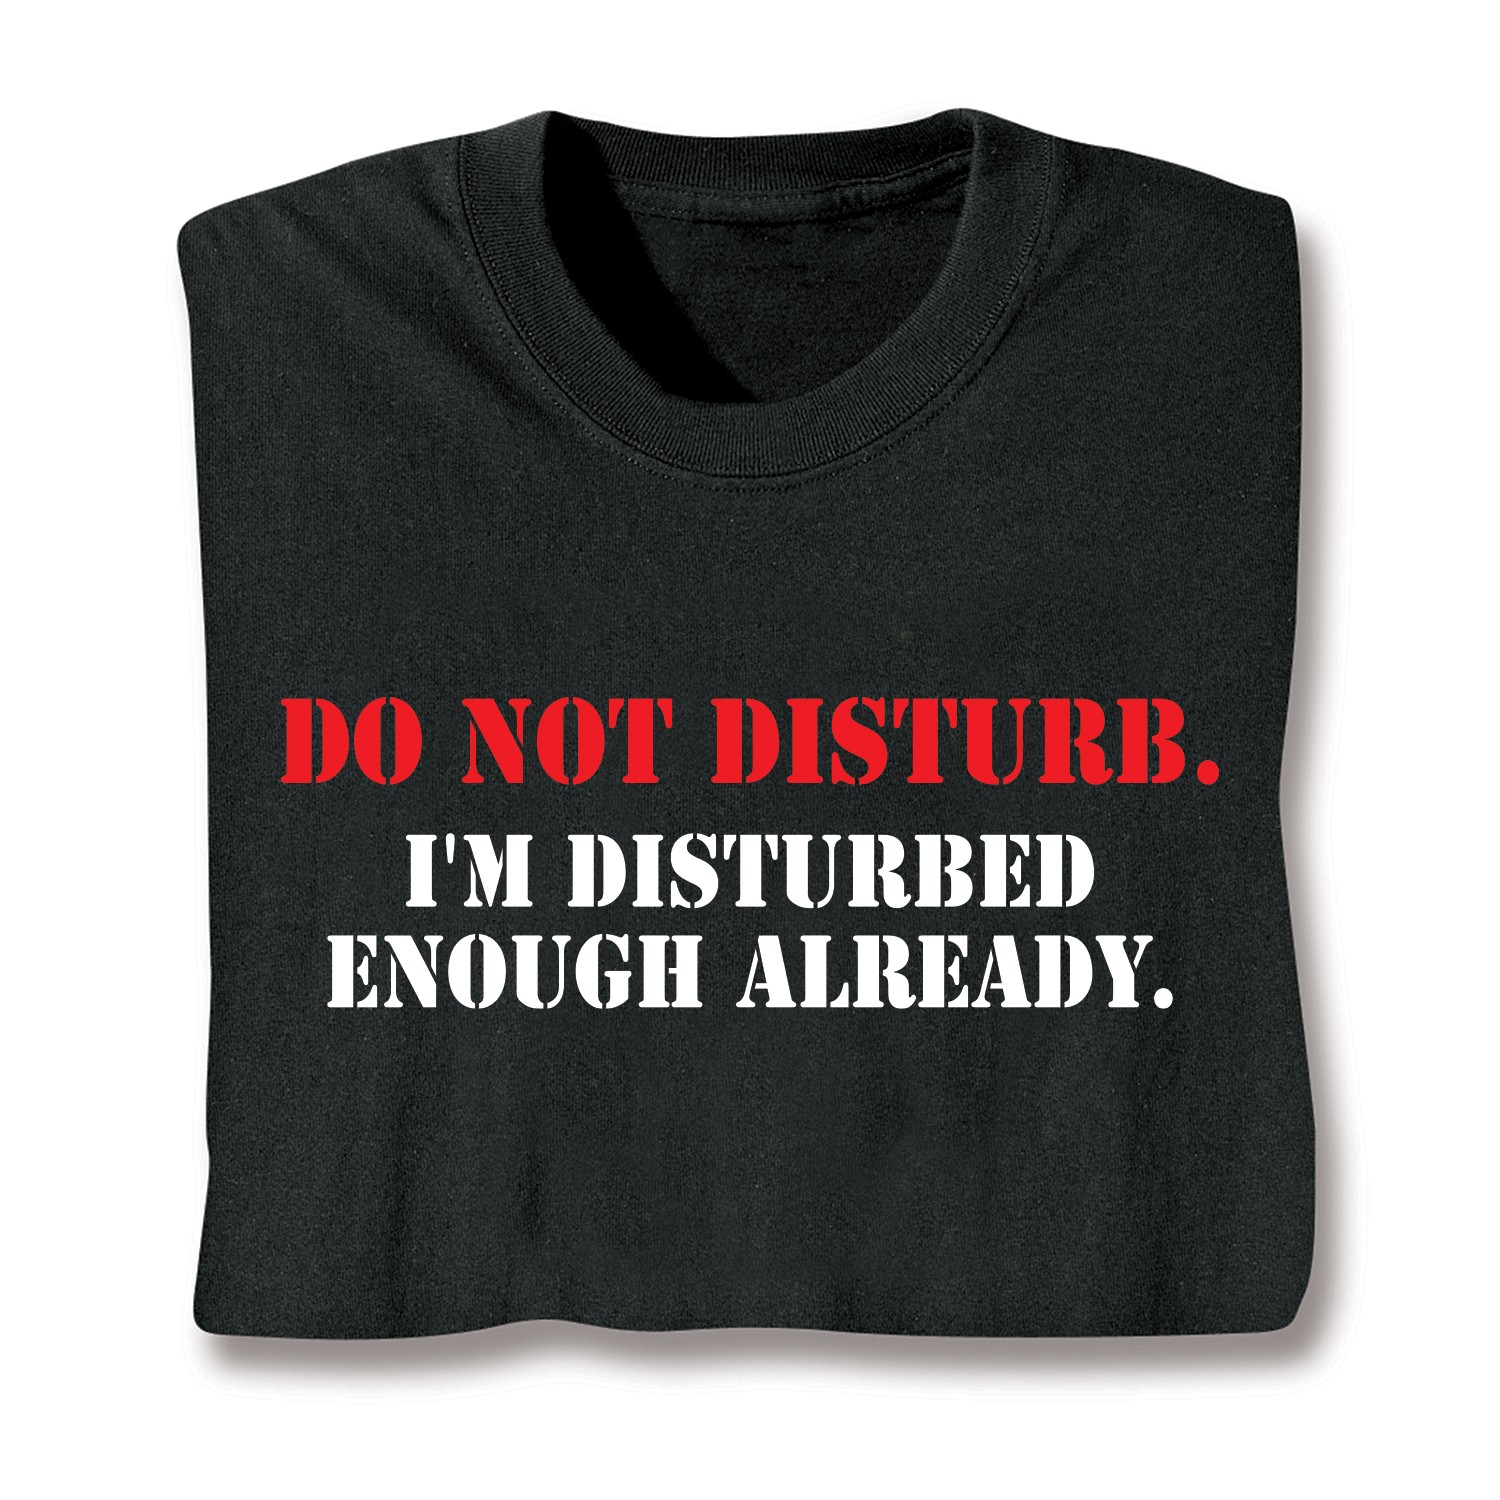 Do Not Disturb. I'm Disturbed Enough Already. T-Shirt or Sweatshirt ...